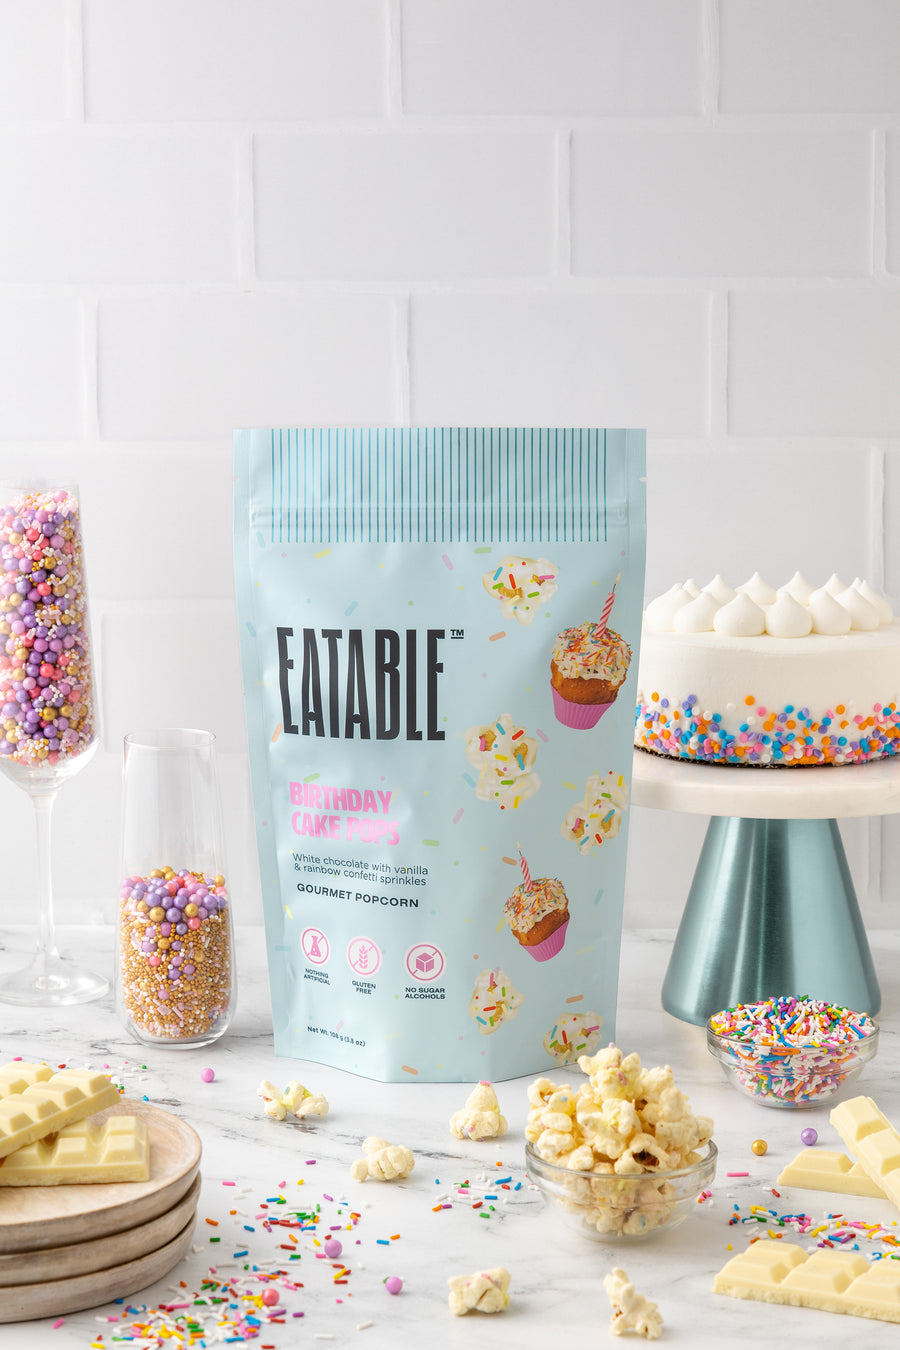 Birthday Cake Pops - White Chocolate Kettle Corn - EATABLE Popcorn